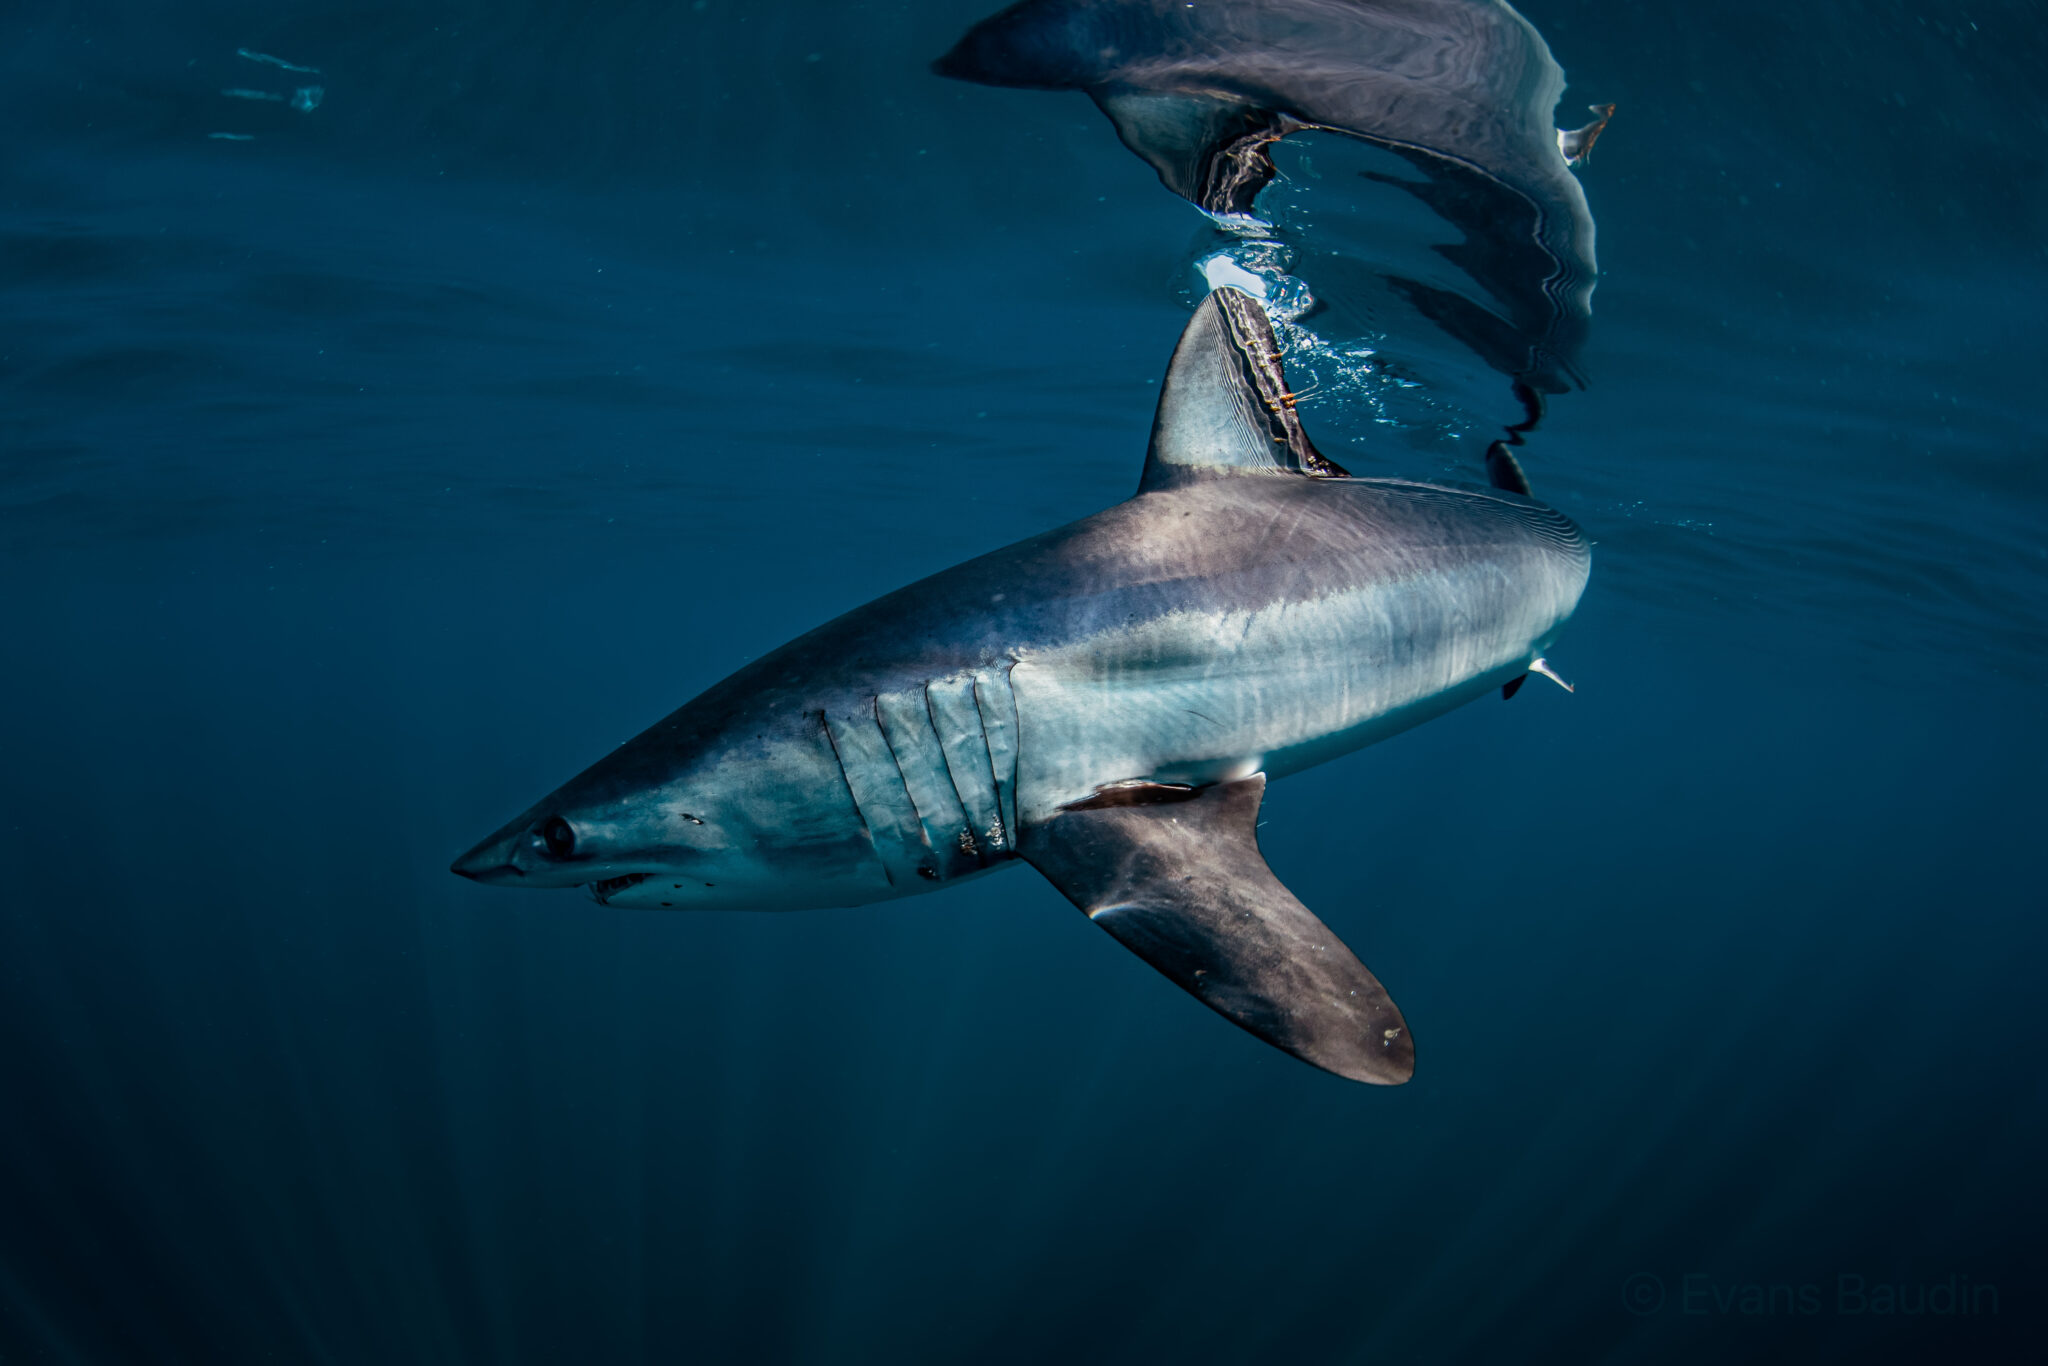 A mako shark swims near the surface of the ocean.